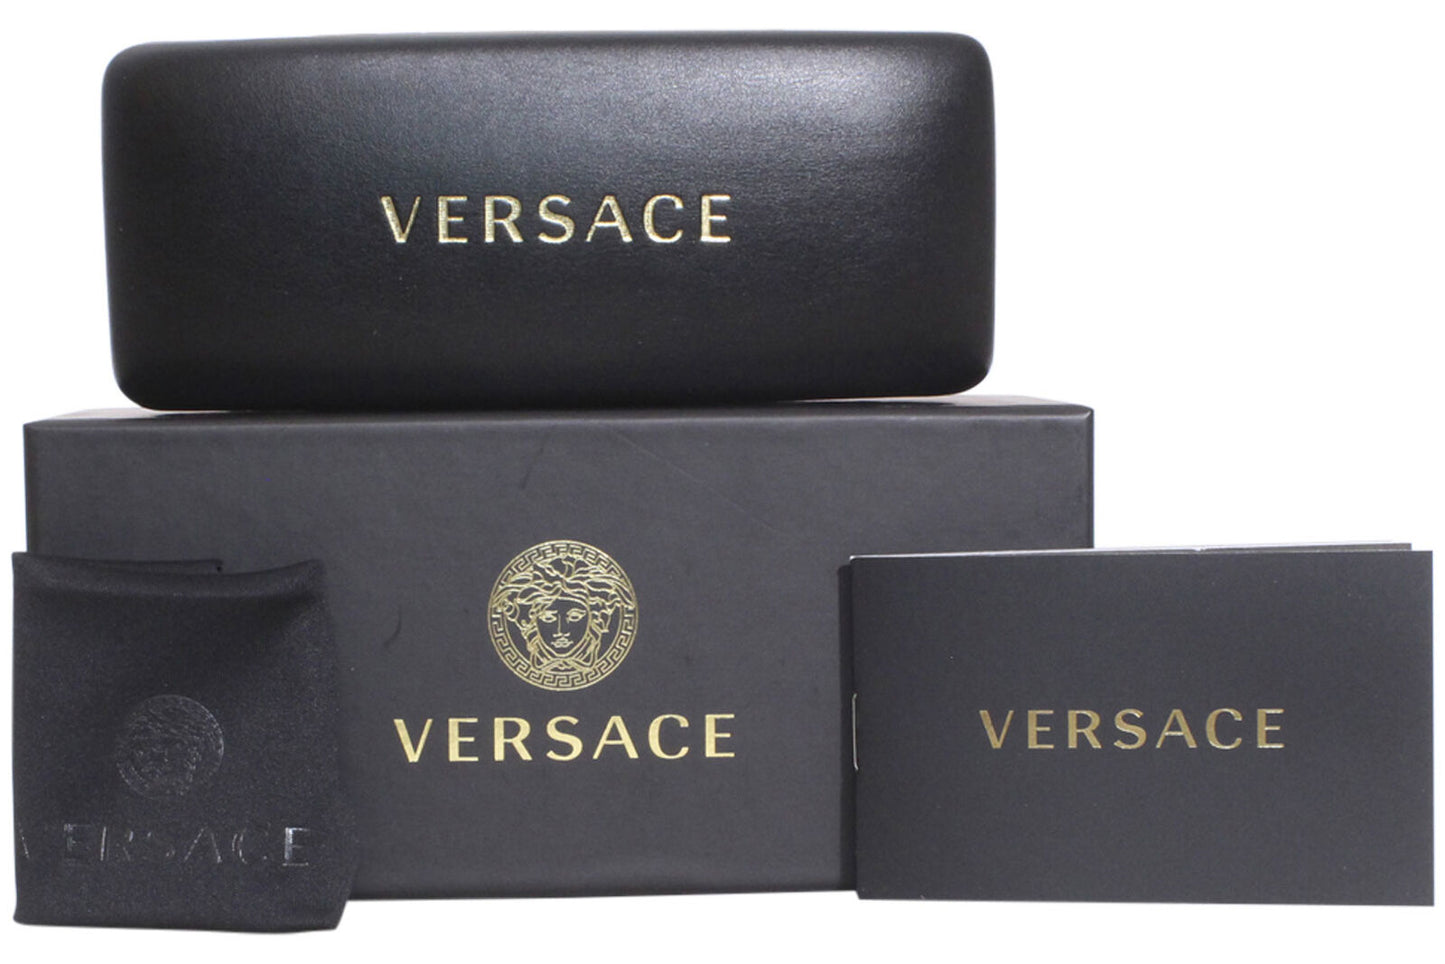 Versace 0VE4445-5409/1 54mm New Sunglasses